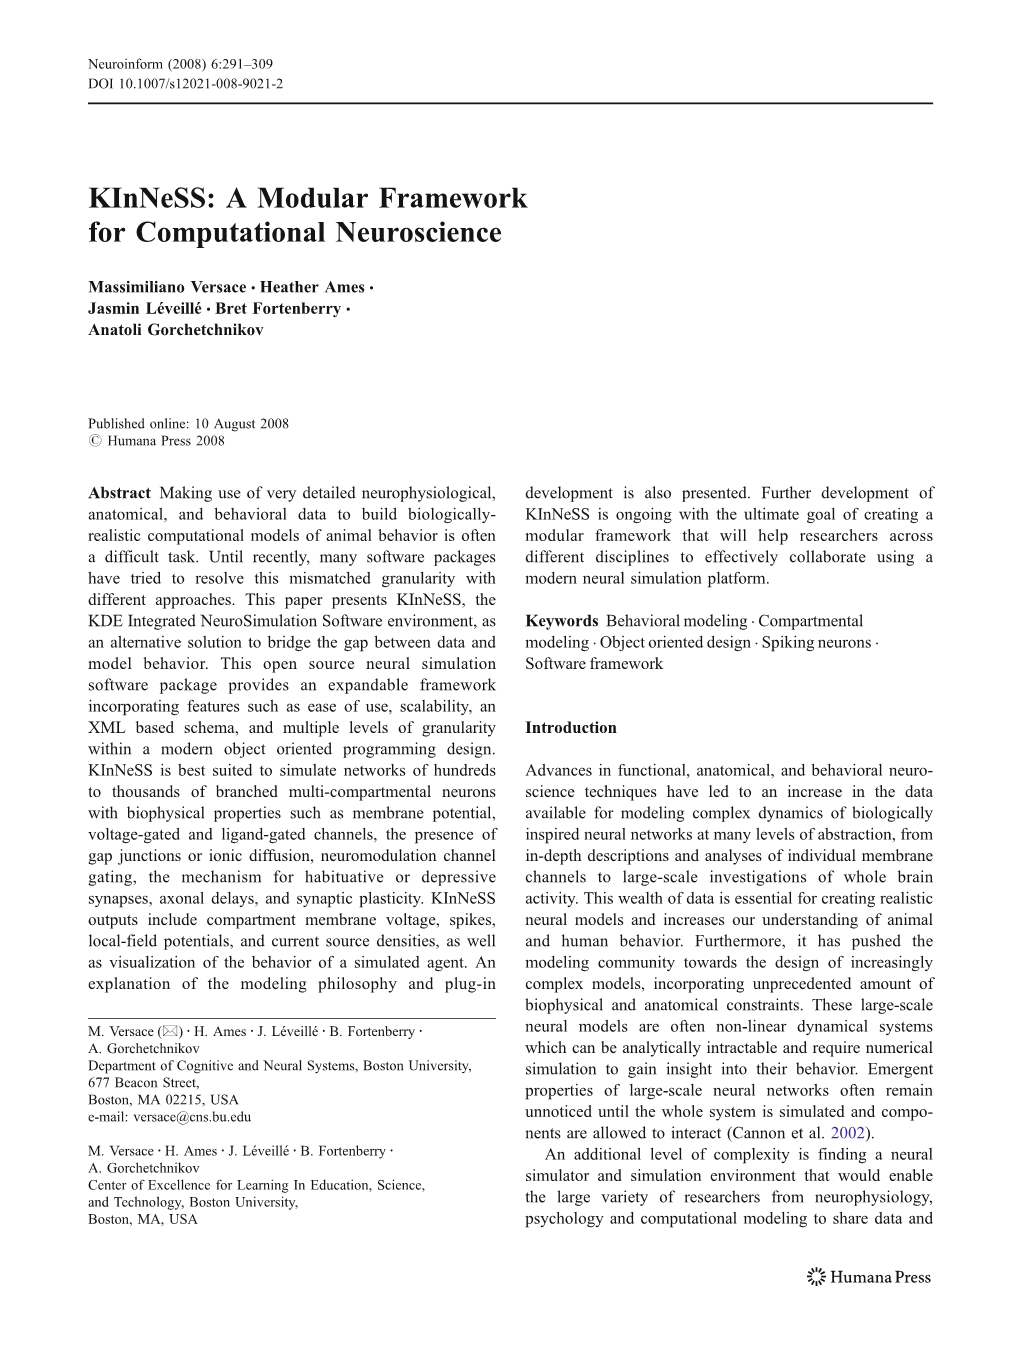 Kinness: a Modular Framework for Computational Neuroscience